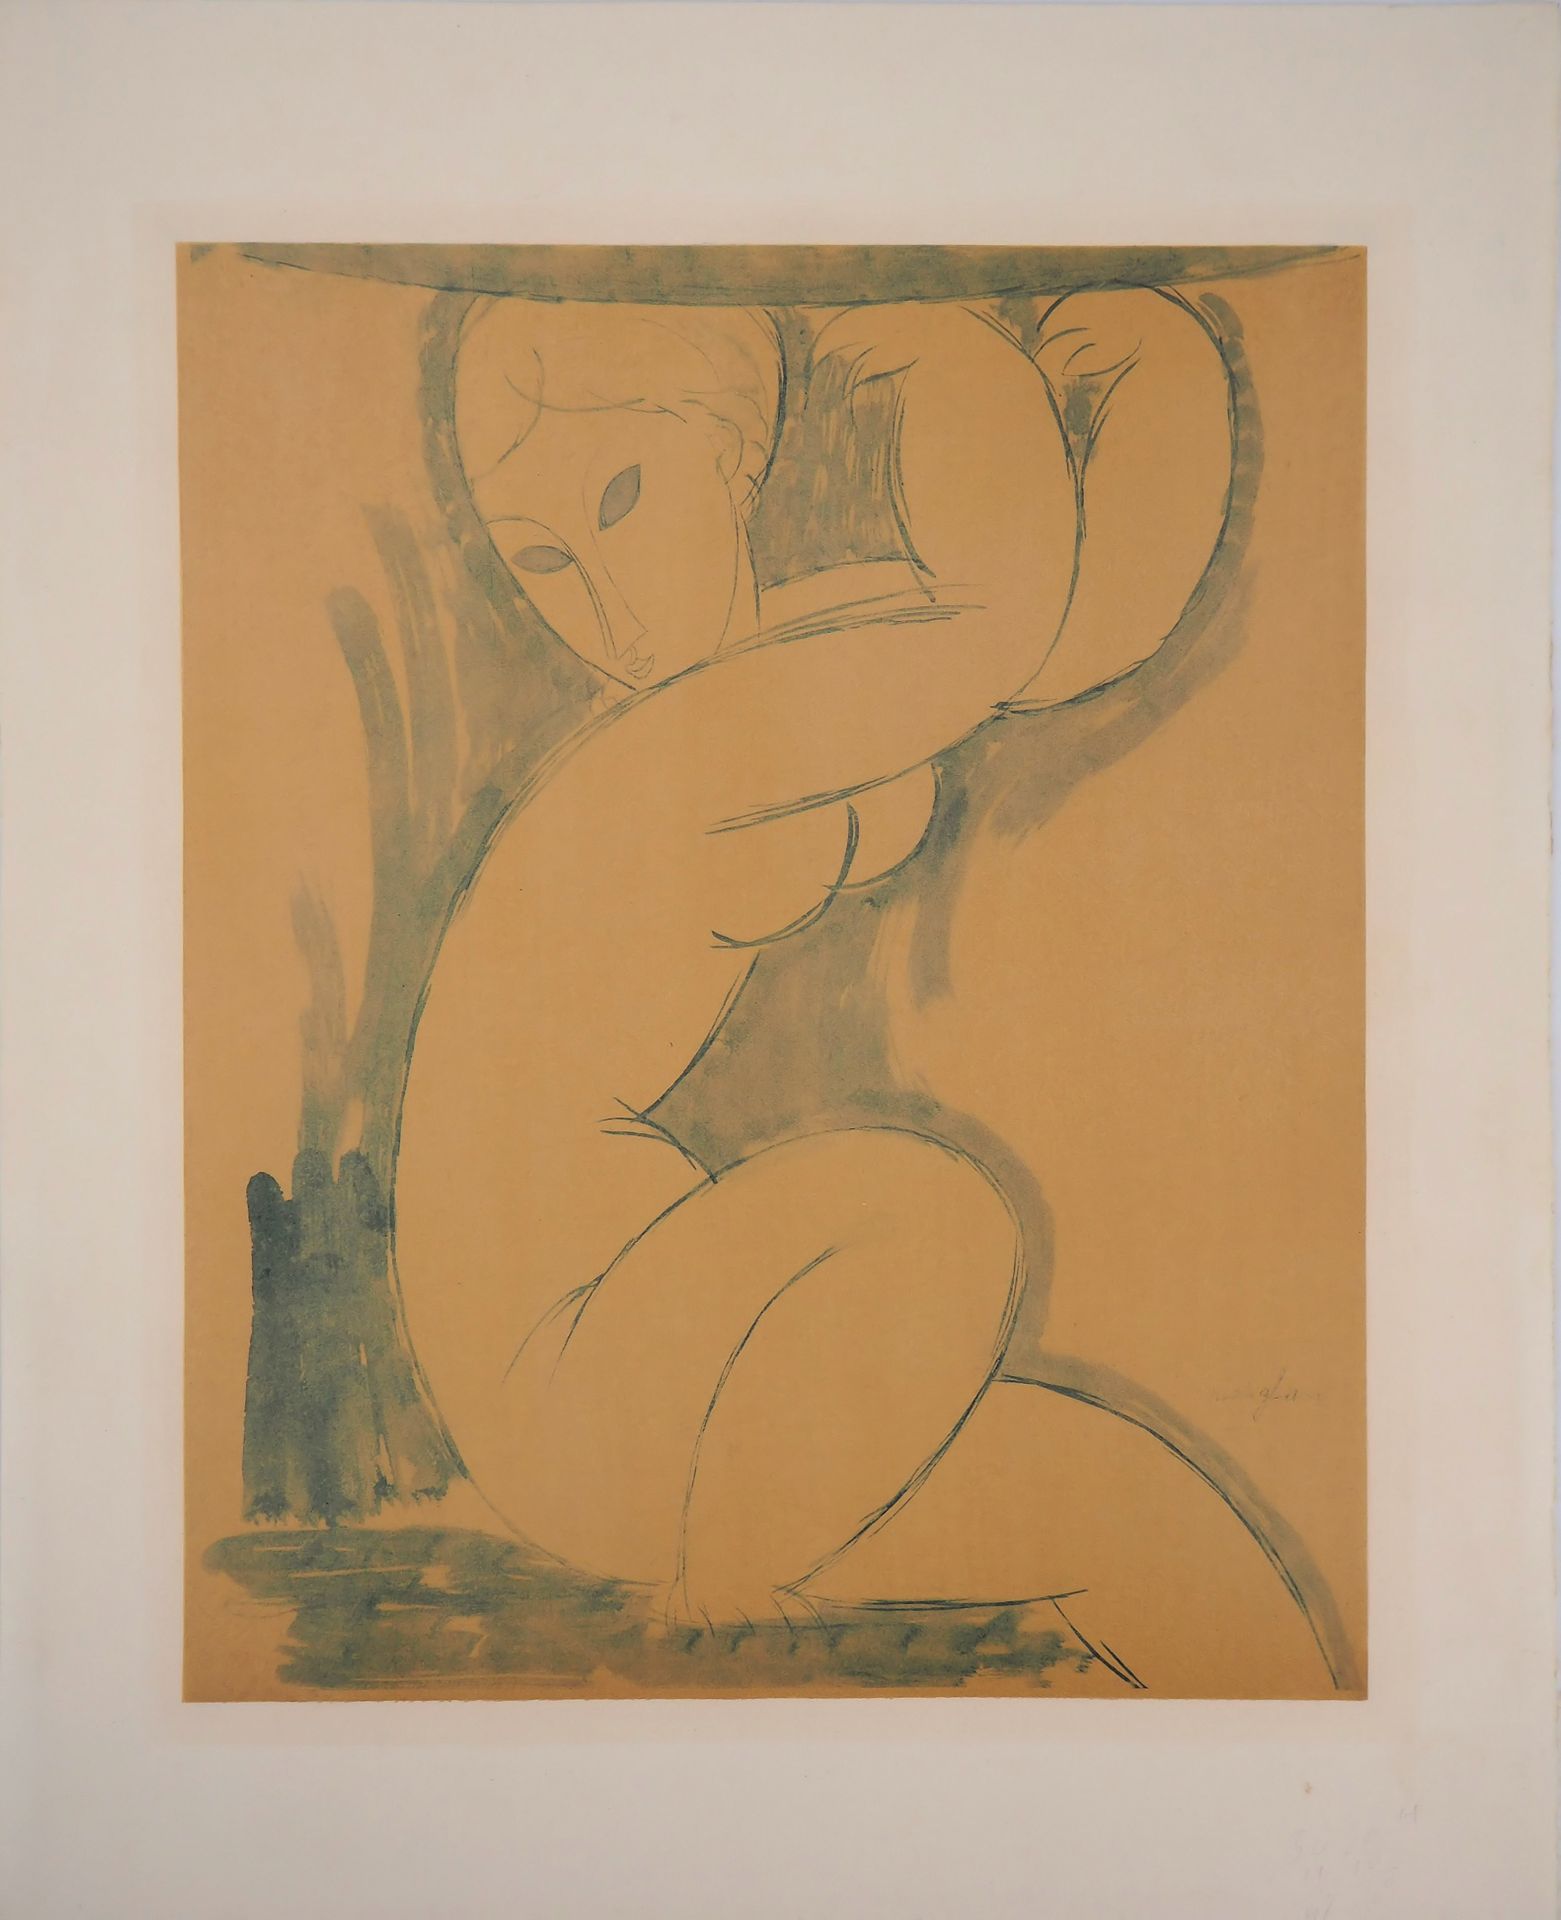 Amedeo Modigliani Amedeo MODIGLIANI

Sitzende nackte Frau

Lithographie nach ein&hellip;